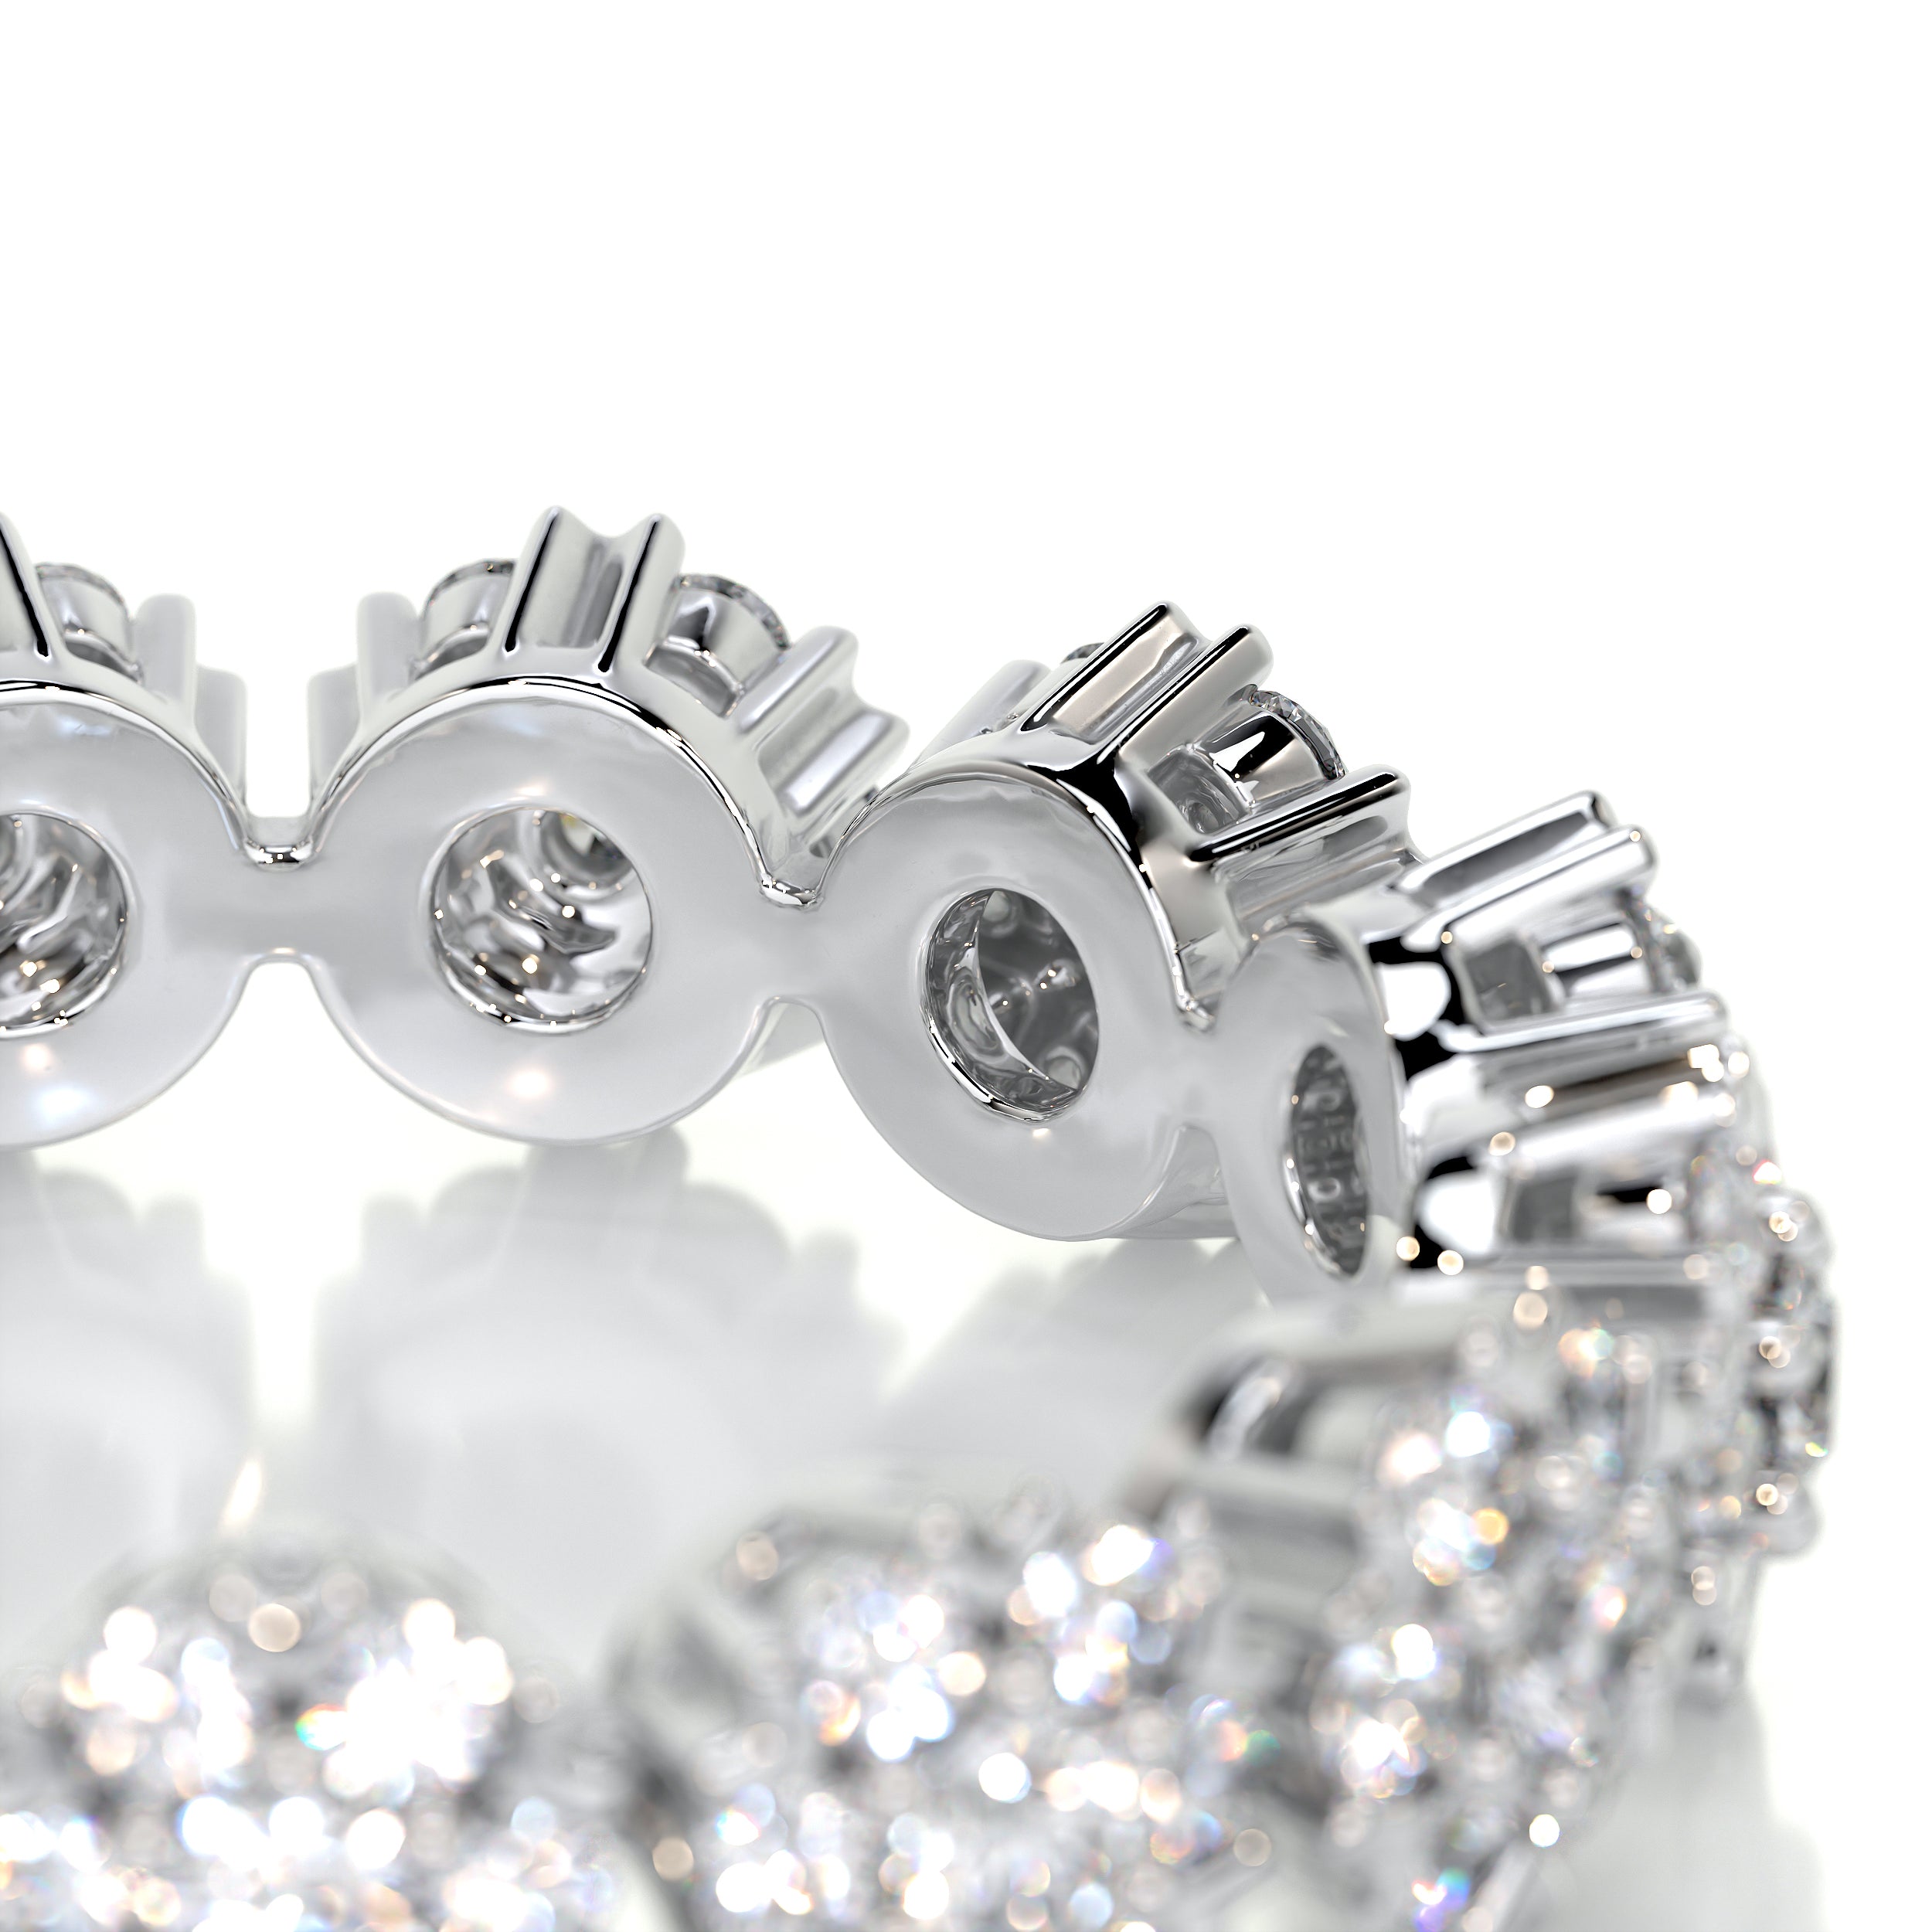 Holly Diamond Wedding Ring   (1 Carat) -14K White Gold